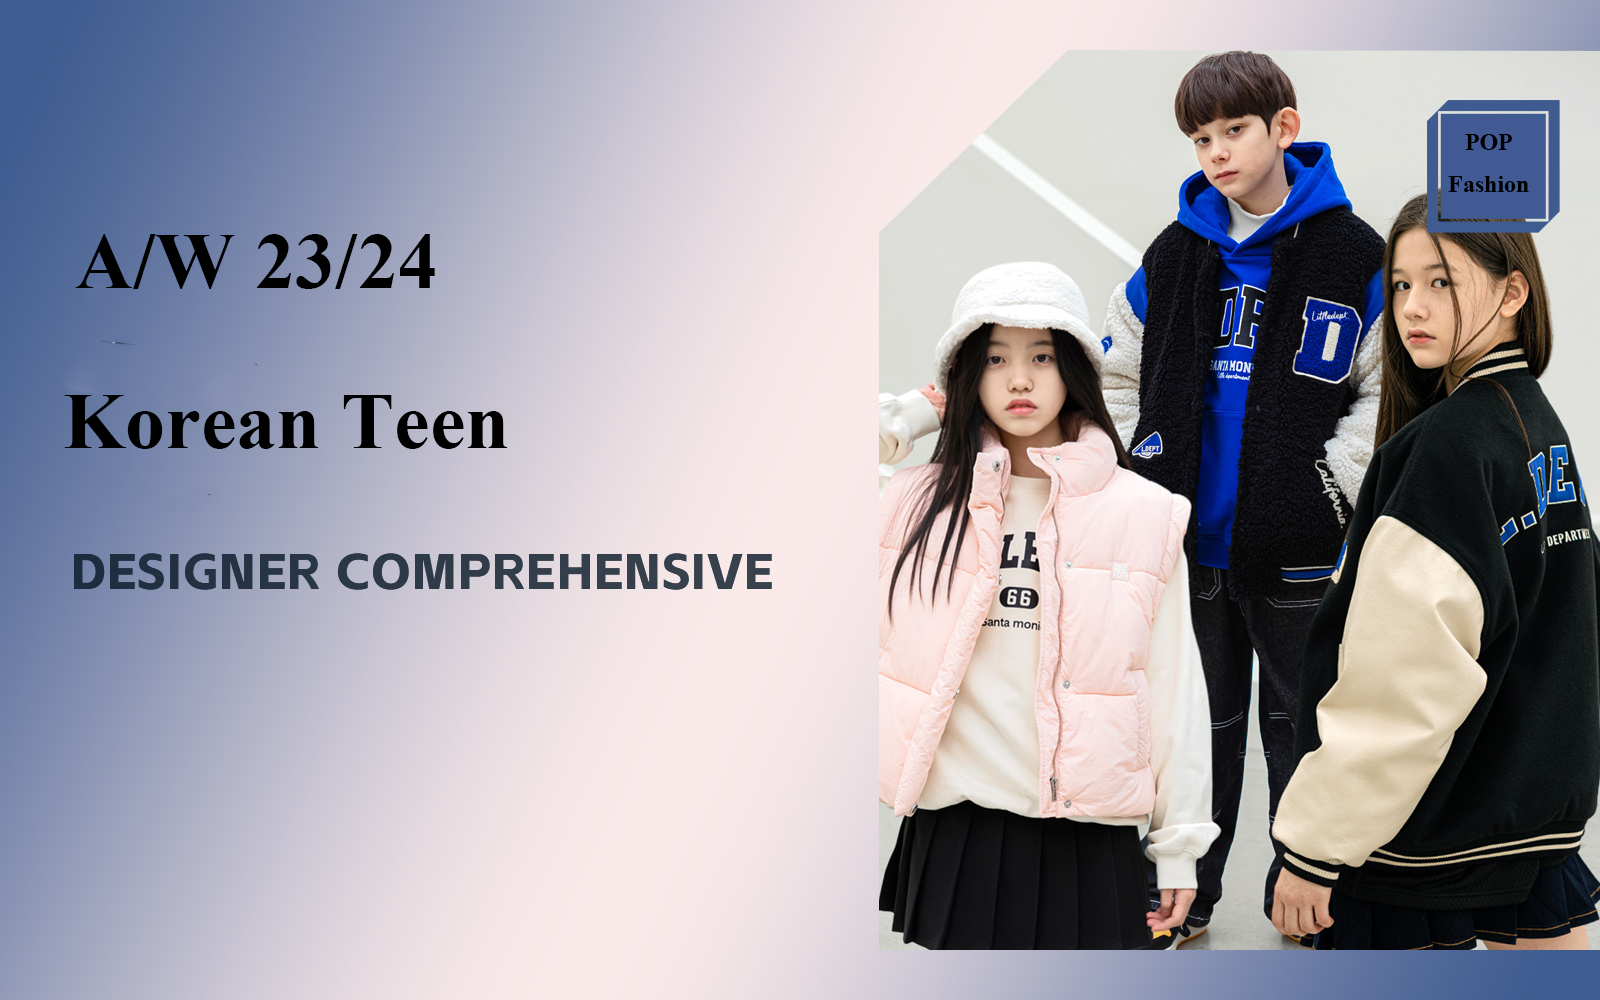 Korean Teen -- The Comprehensive Analysis of Kidswear Designer Brand